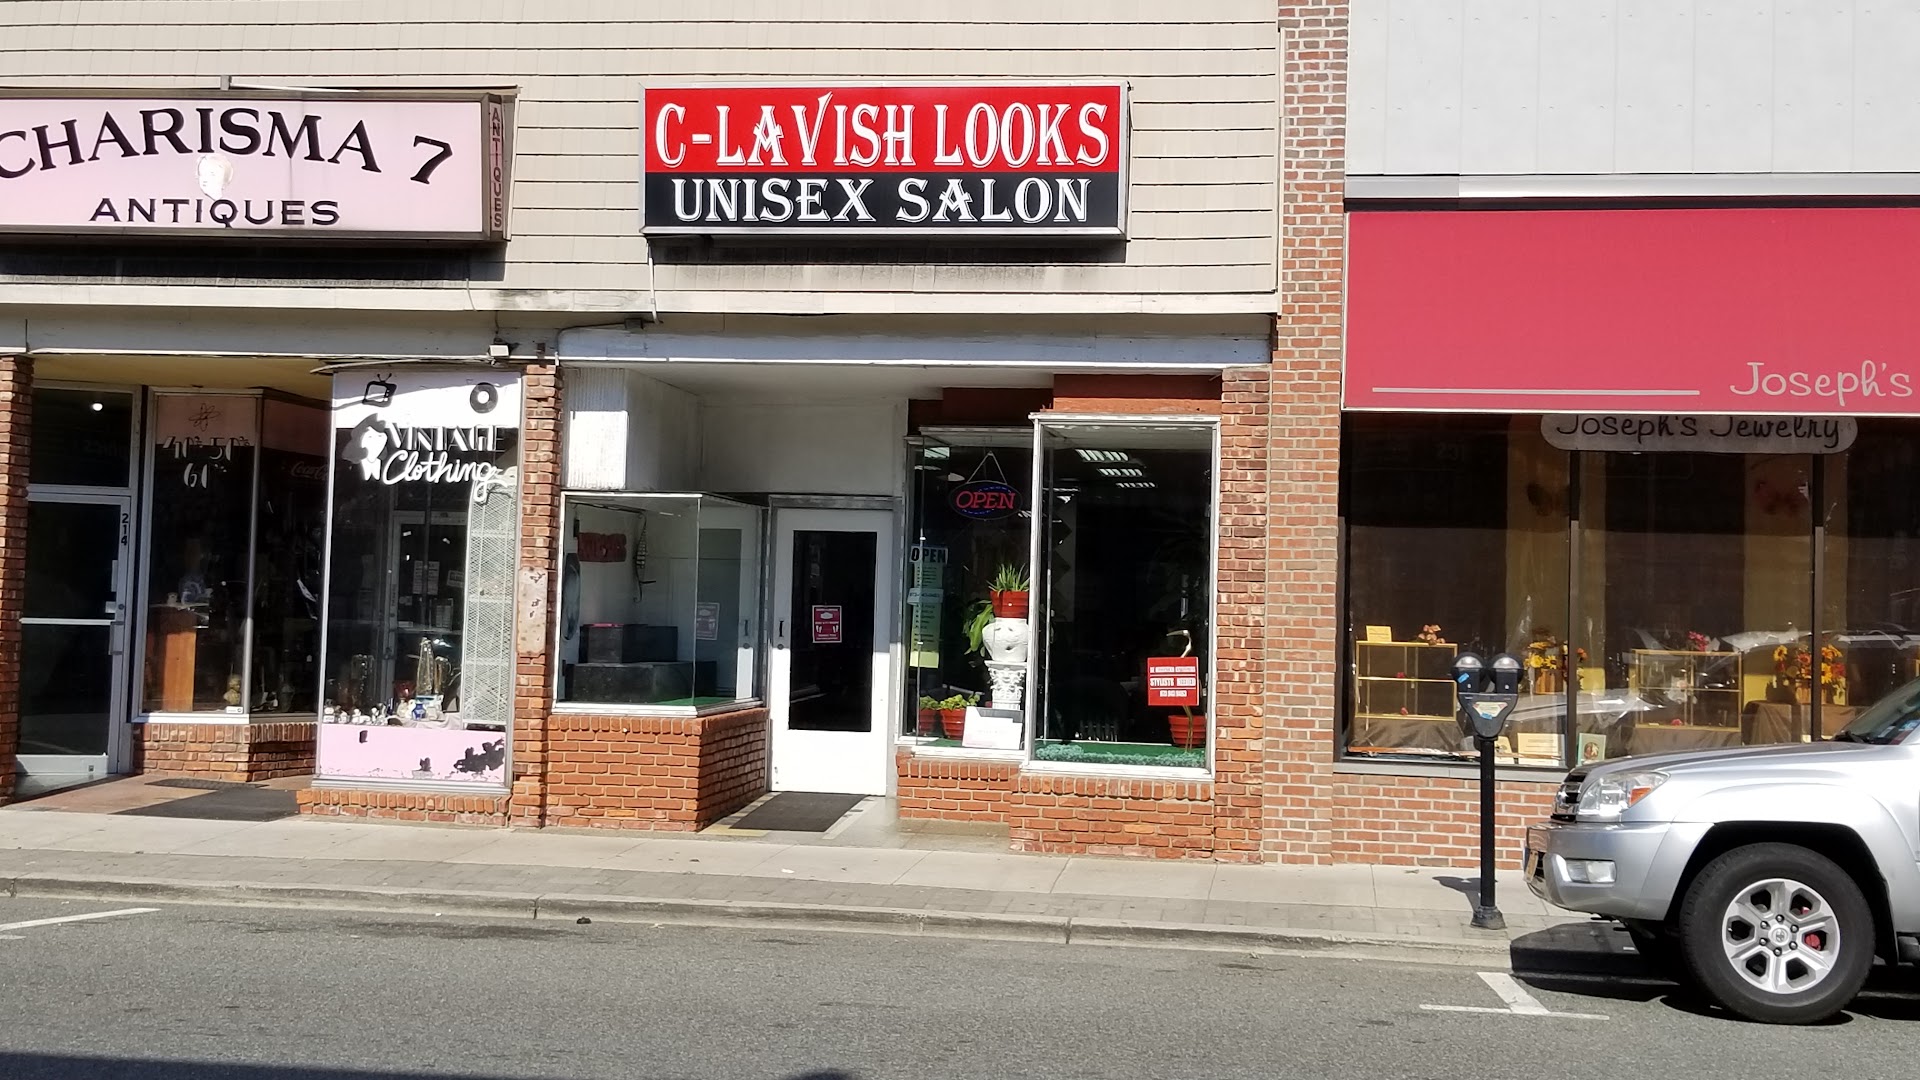 C-Lavish Looks Unisex Salon